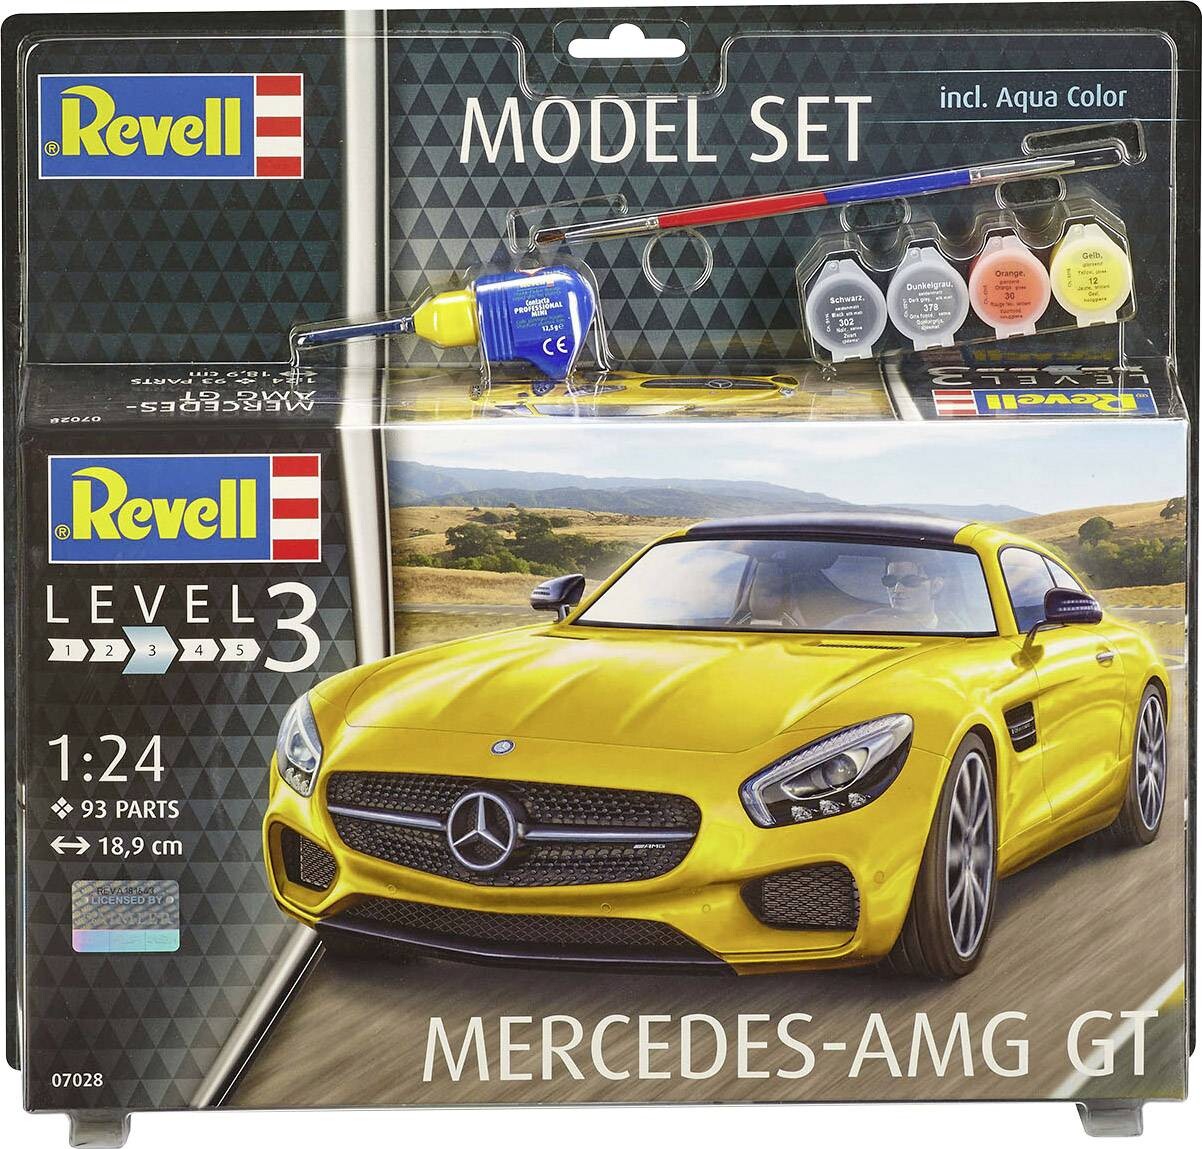 Revell - Mercedes Amg Gt Byggesæt Inkl. Maling - 1:24 - Level 3 - 67028